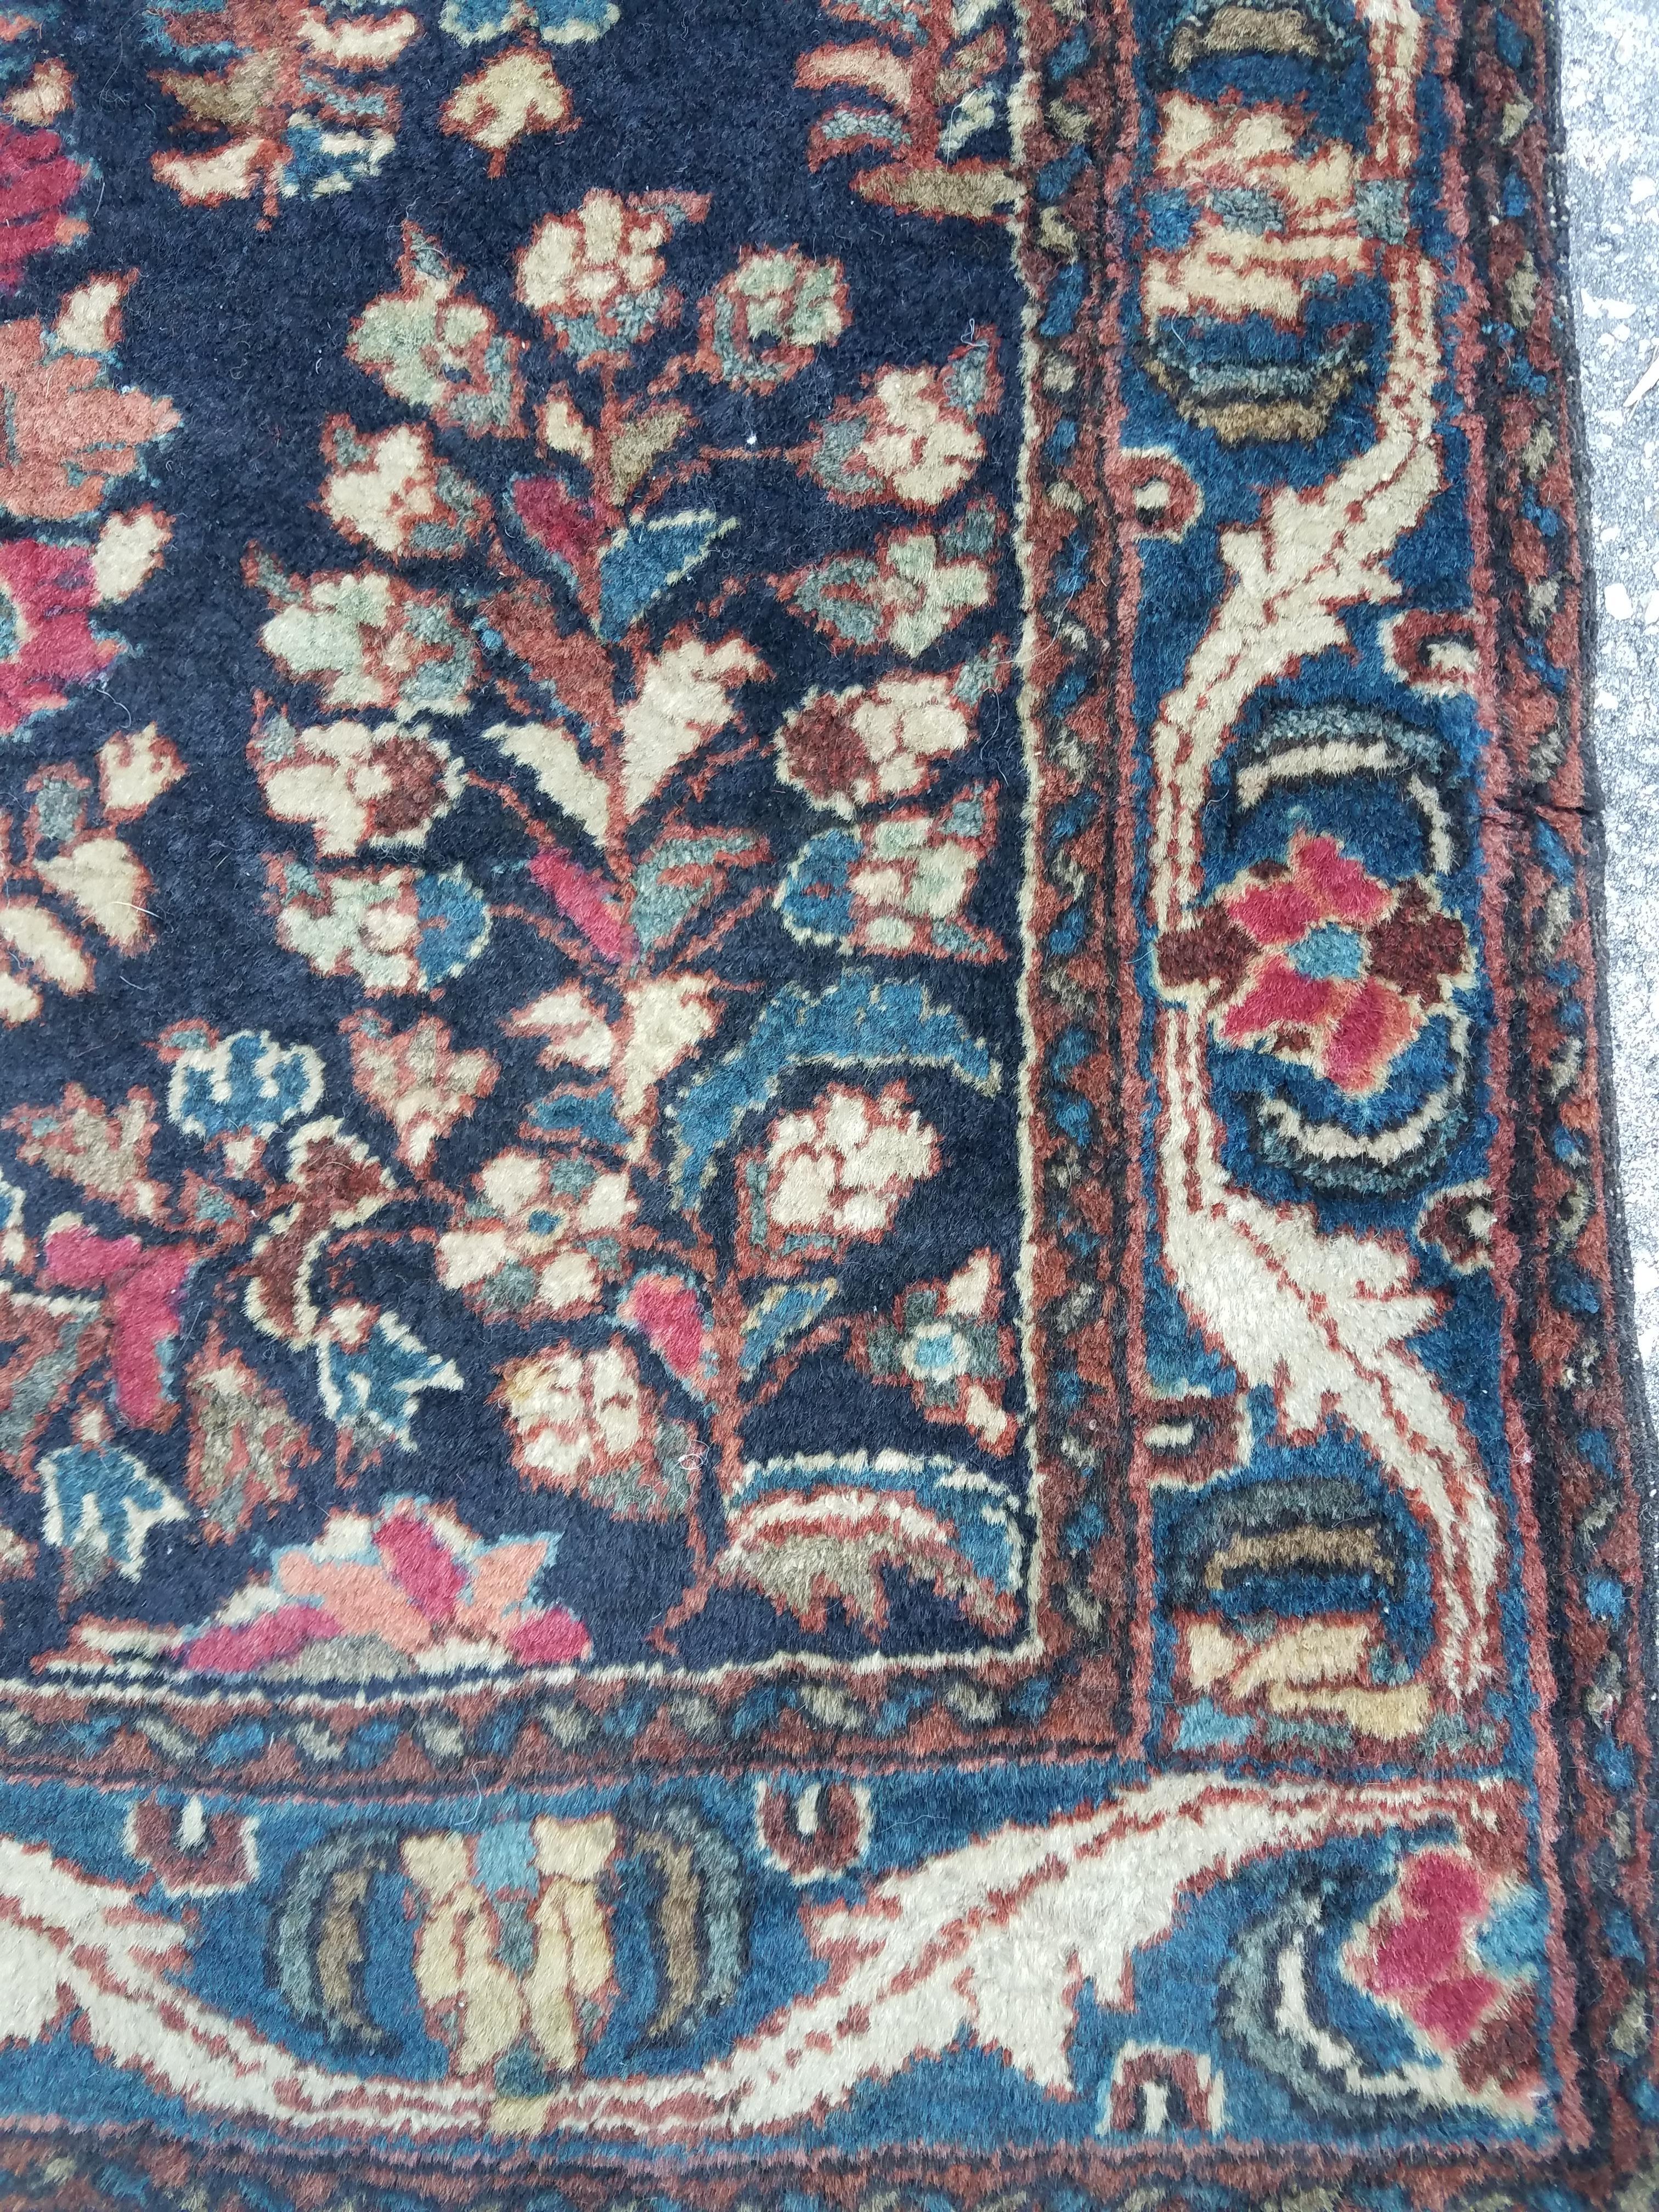 Stunning Turkish area rug measuring approximately 57